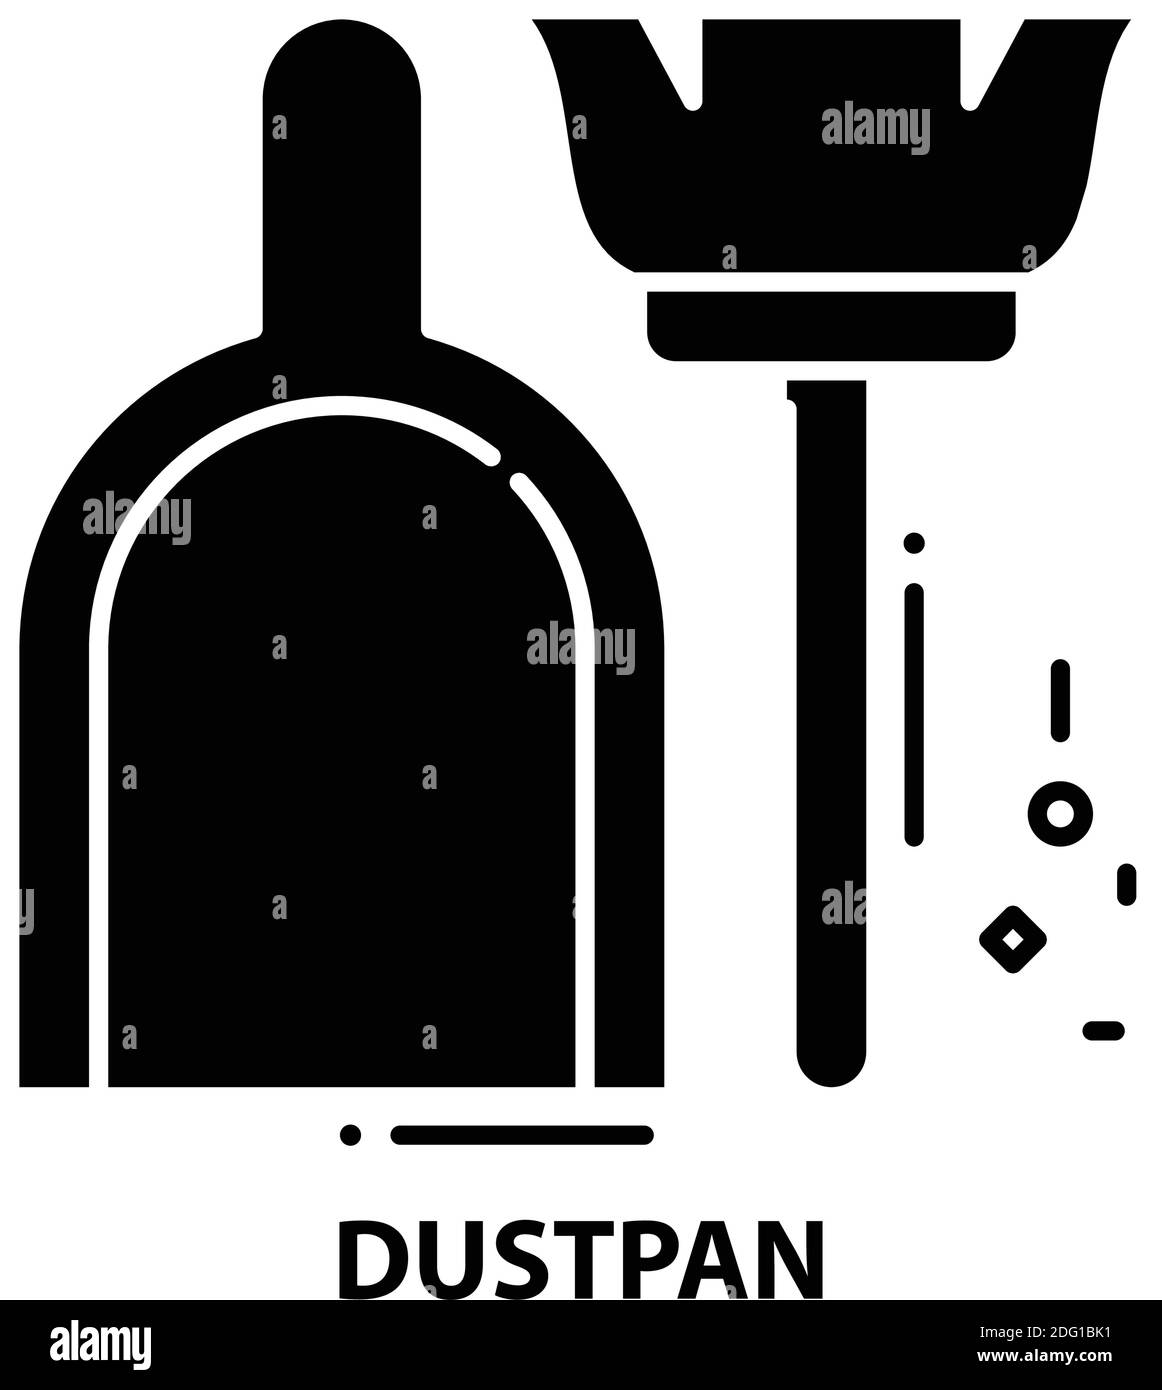 dustpan icon, black vector sign with editable strokes, concept illustration Stock Vector